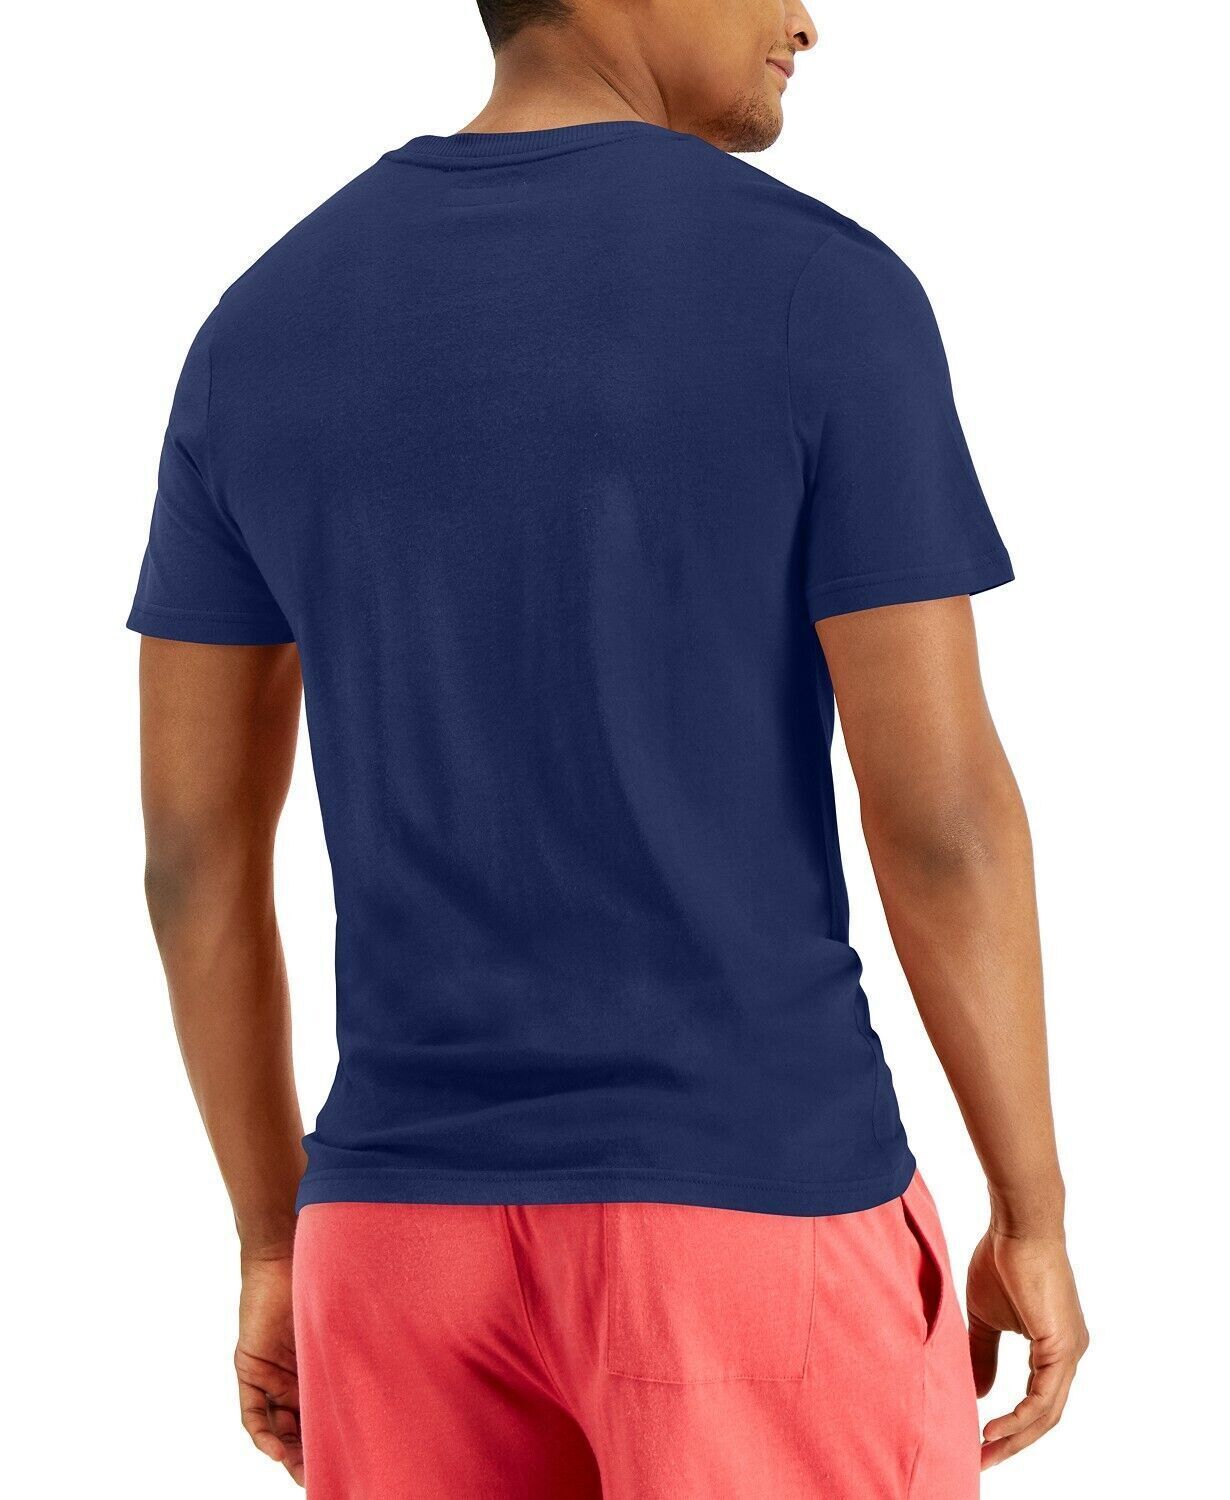 Club Room BLUE Men's Pajama T-Shirt, US Medium